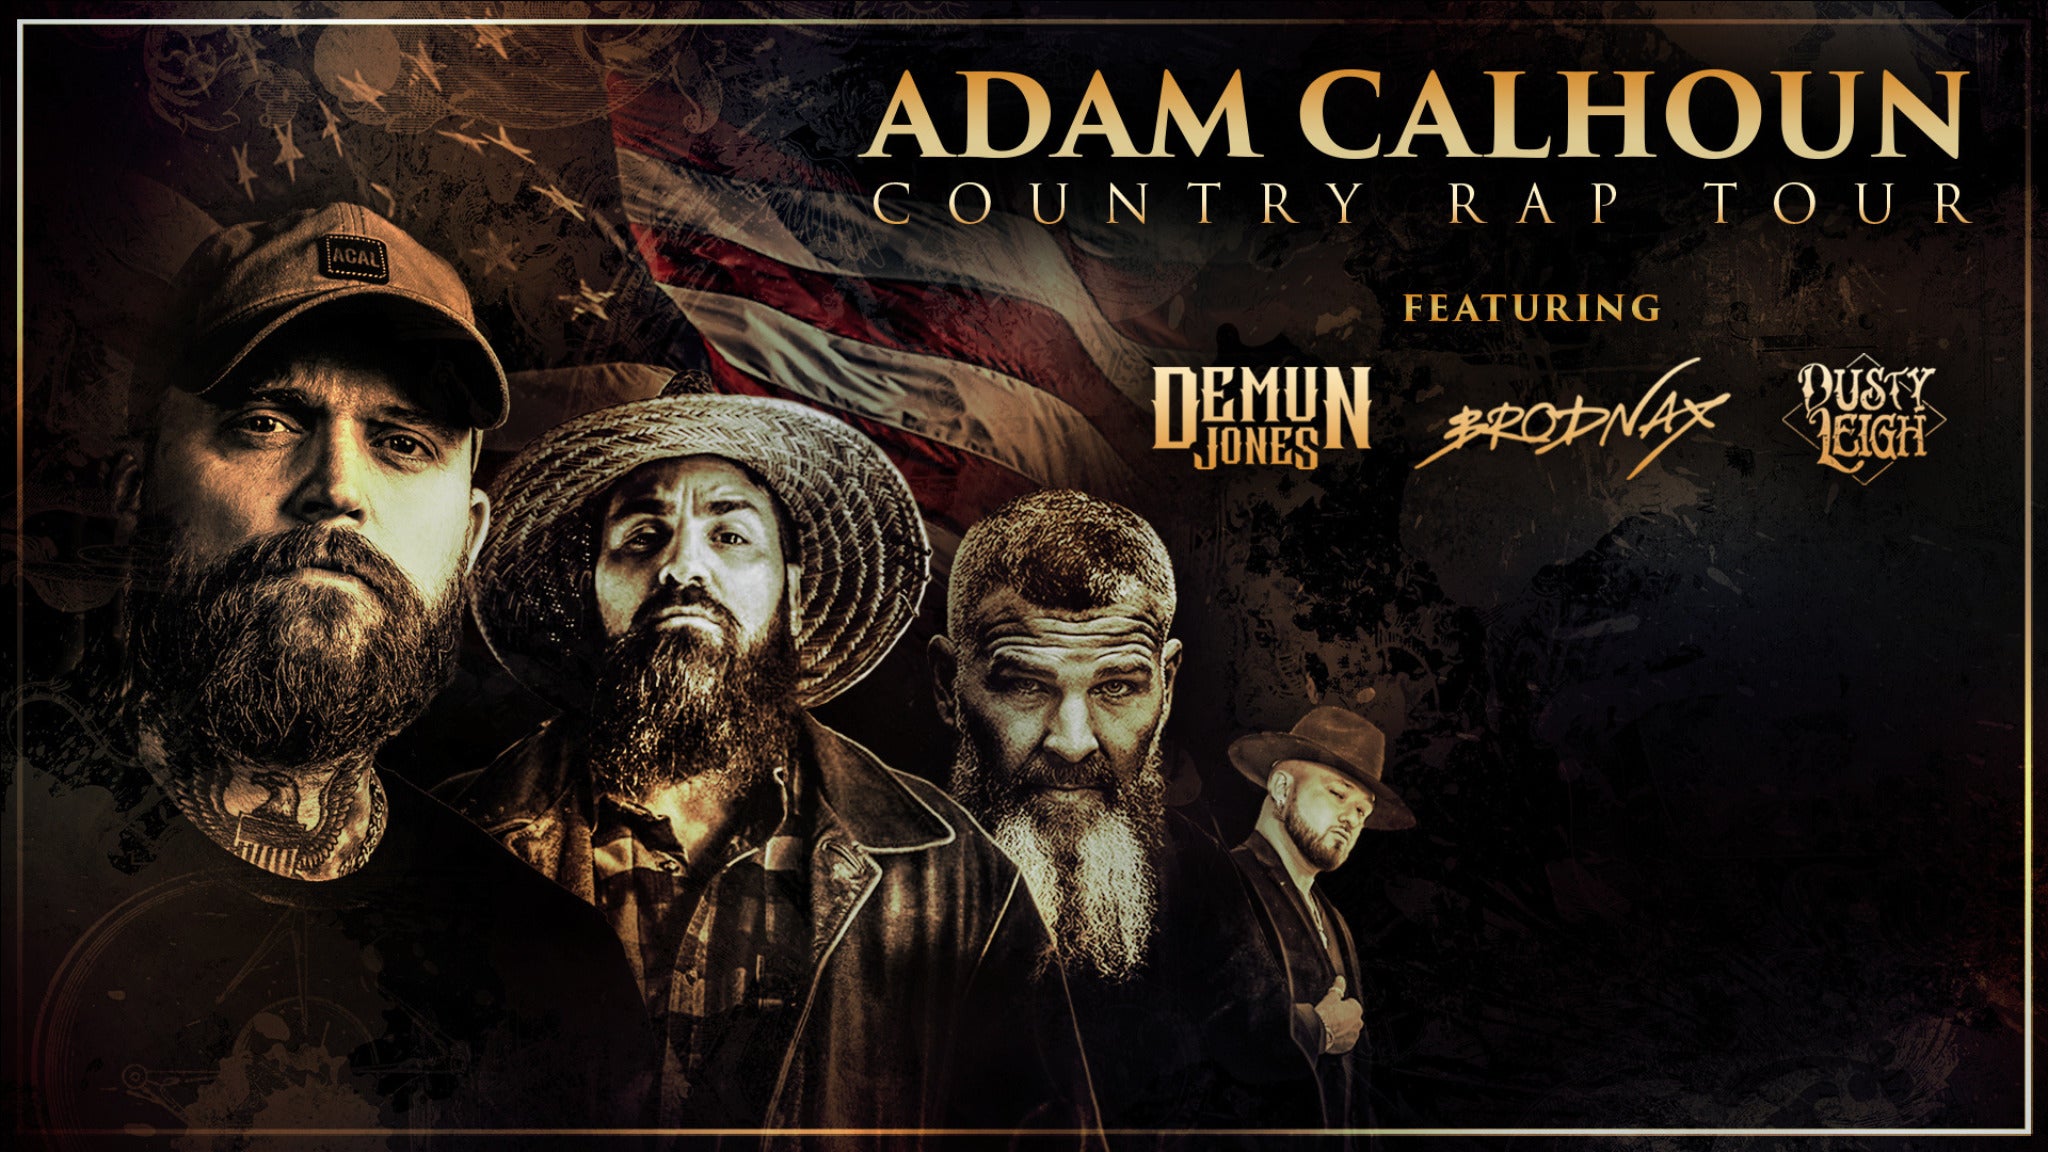 Adam Calhoun "Country Rap Tour" with Demun Jones & Brodnax